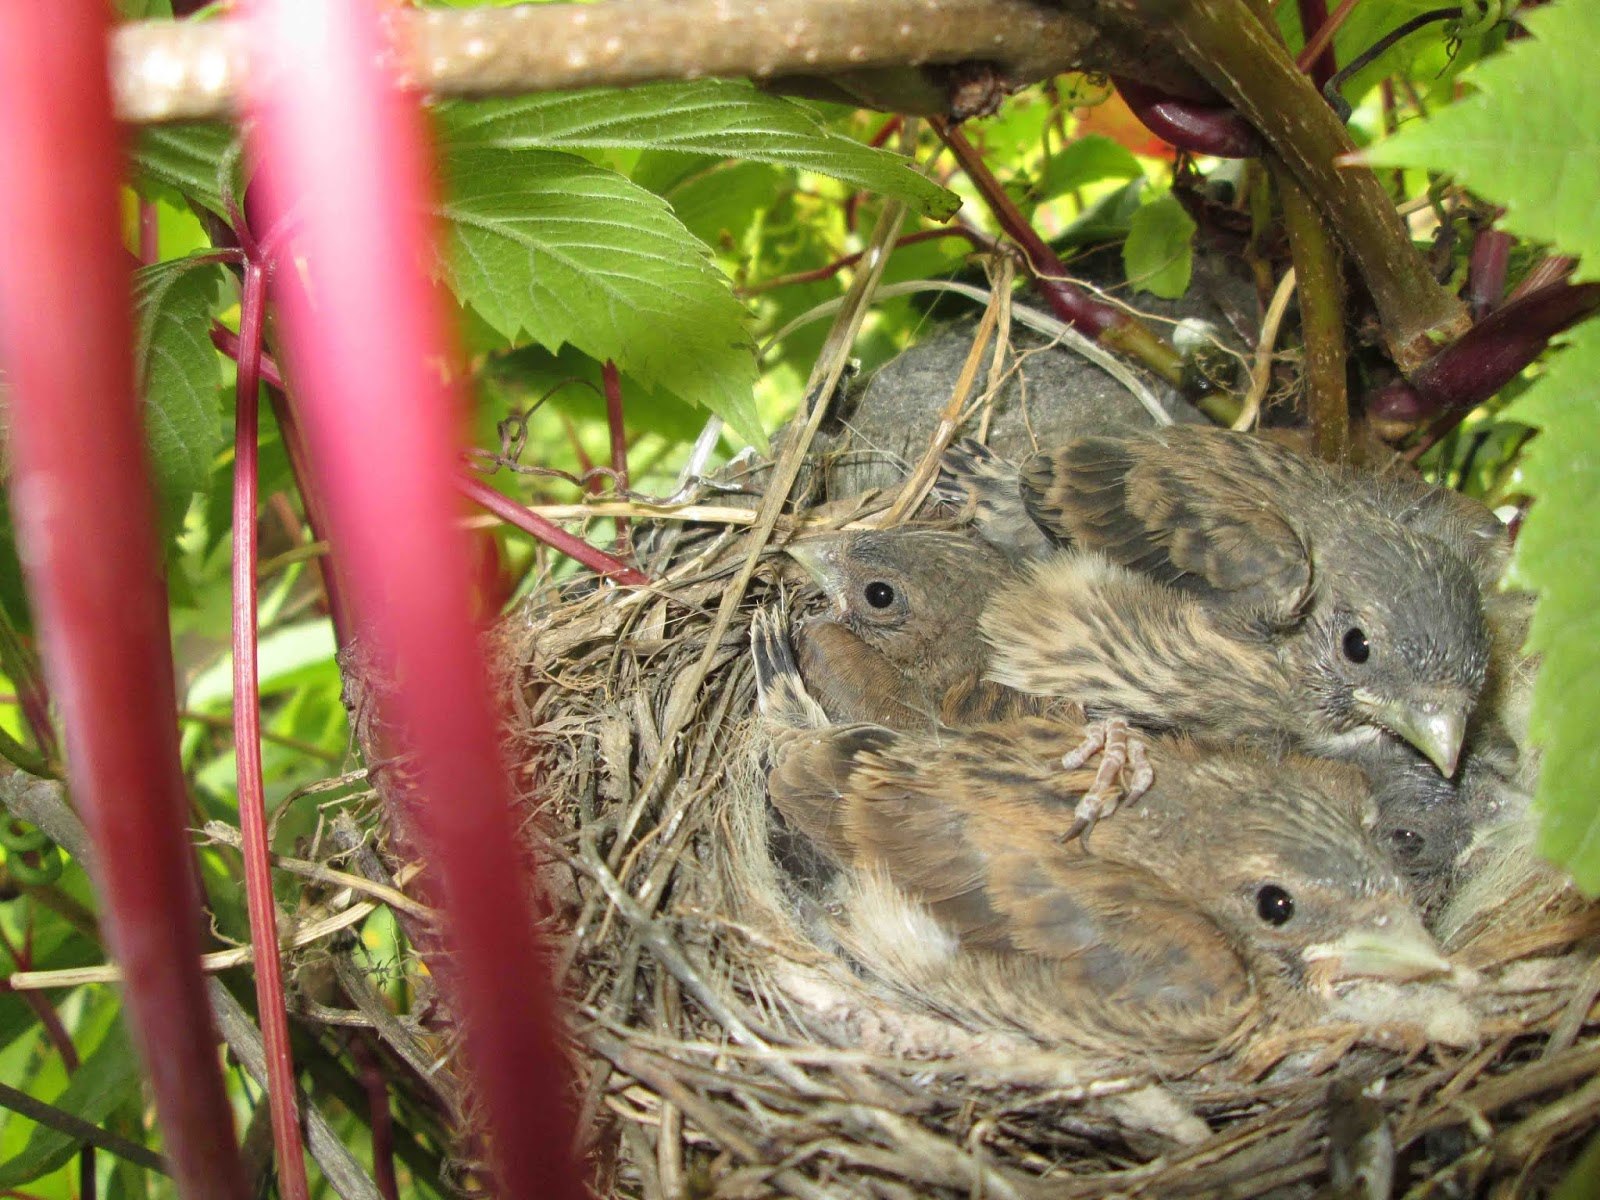 Гнезда птиц под крышей дома. Дрозд свил гнездо. Птица свила гнездо. Воробей свил гнездо. Гнездо для птиц..